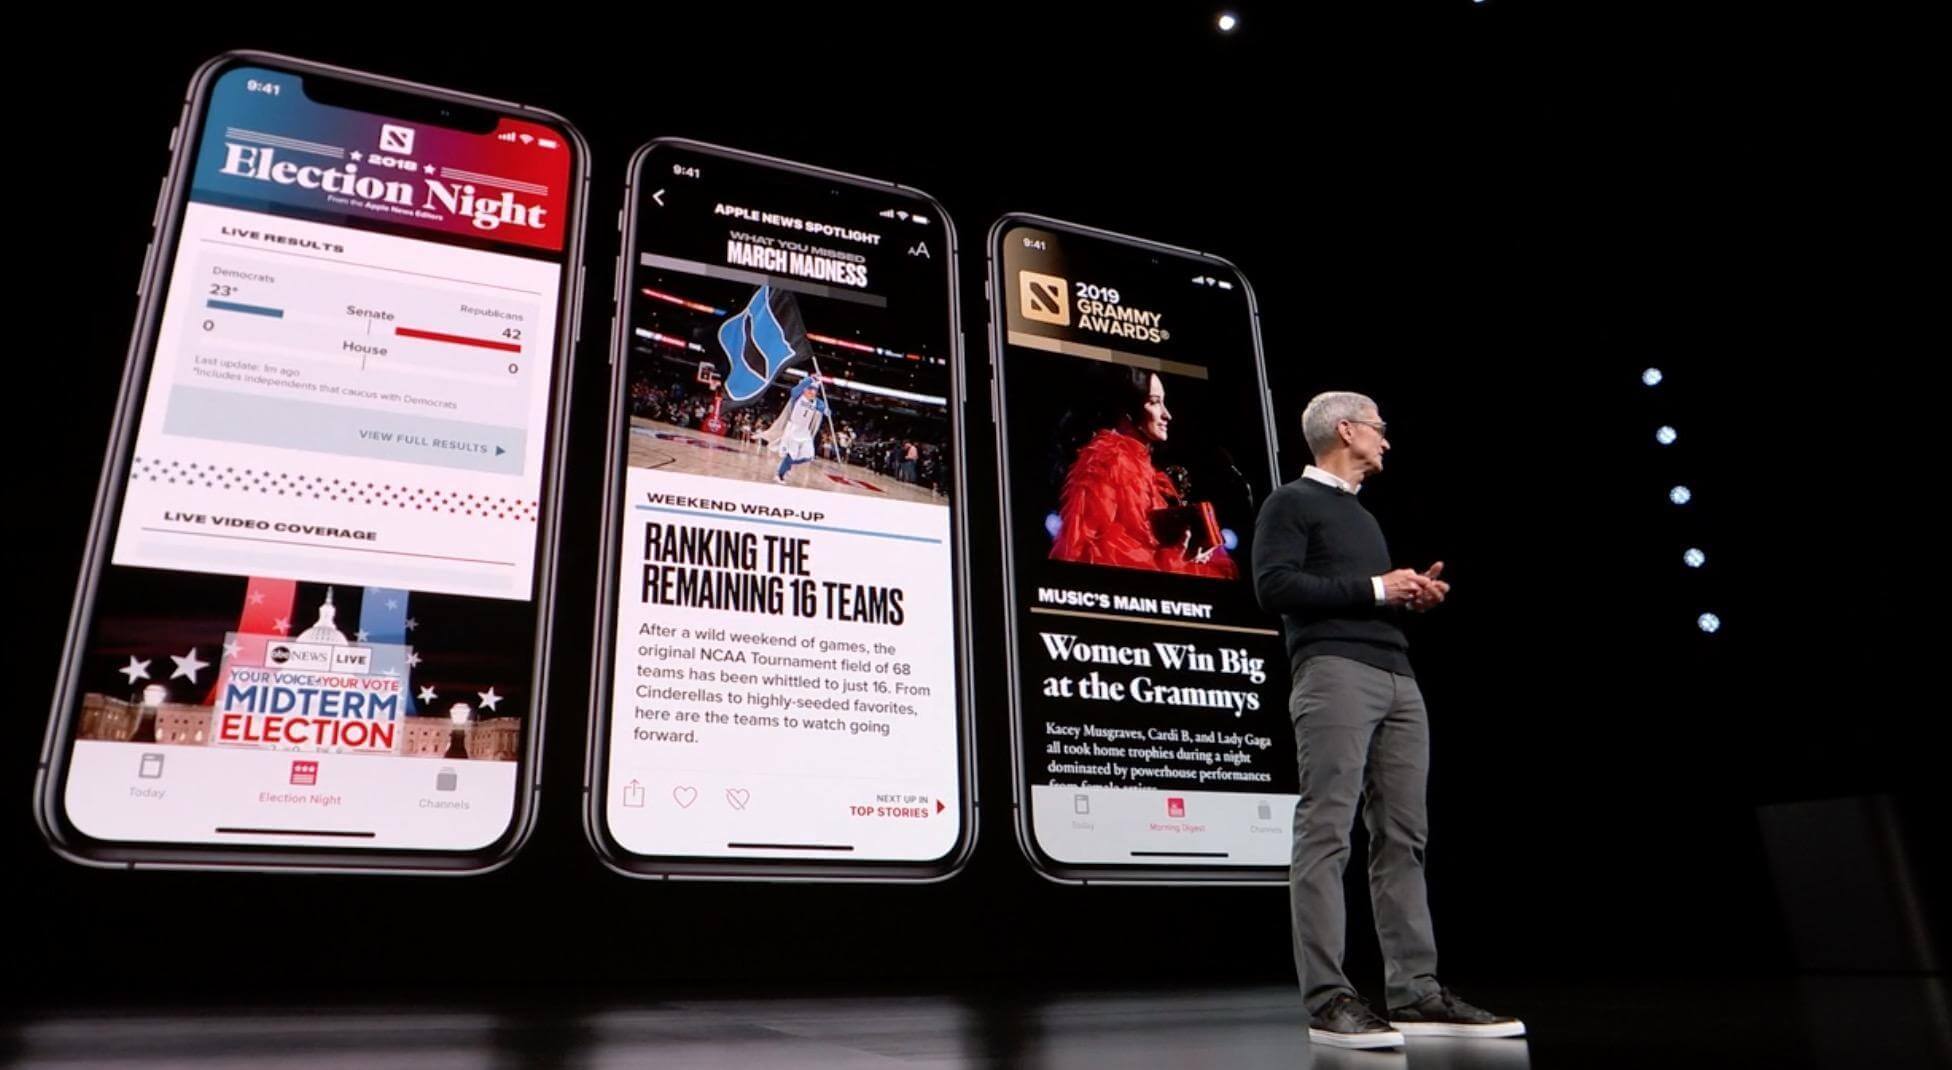 Apple dikabarkan akan merilis iPhone terbaru mereka secara live streaming